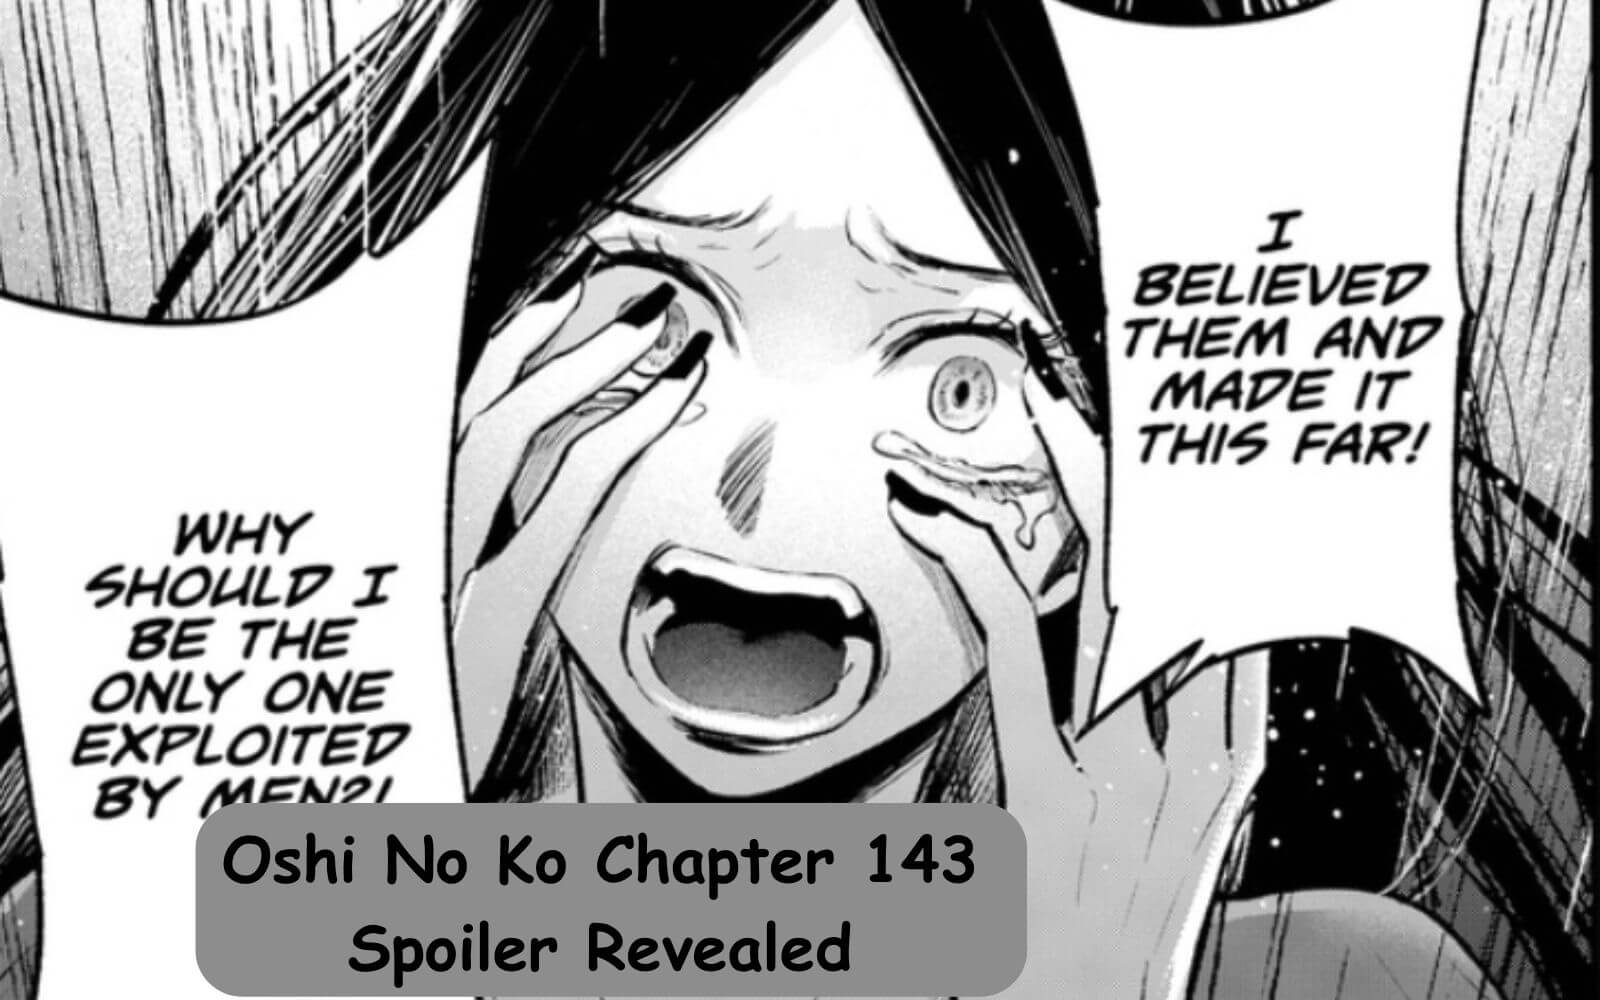 Oshi No Ko Chapter 143 Spoiler Revealed